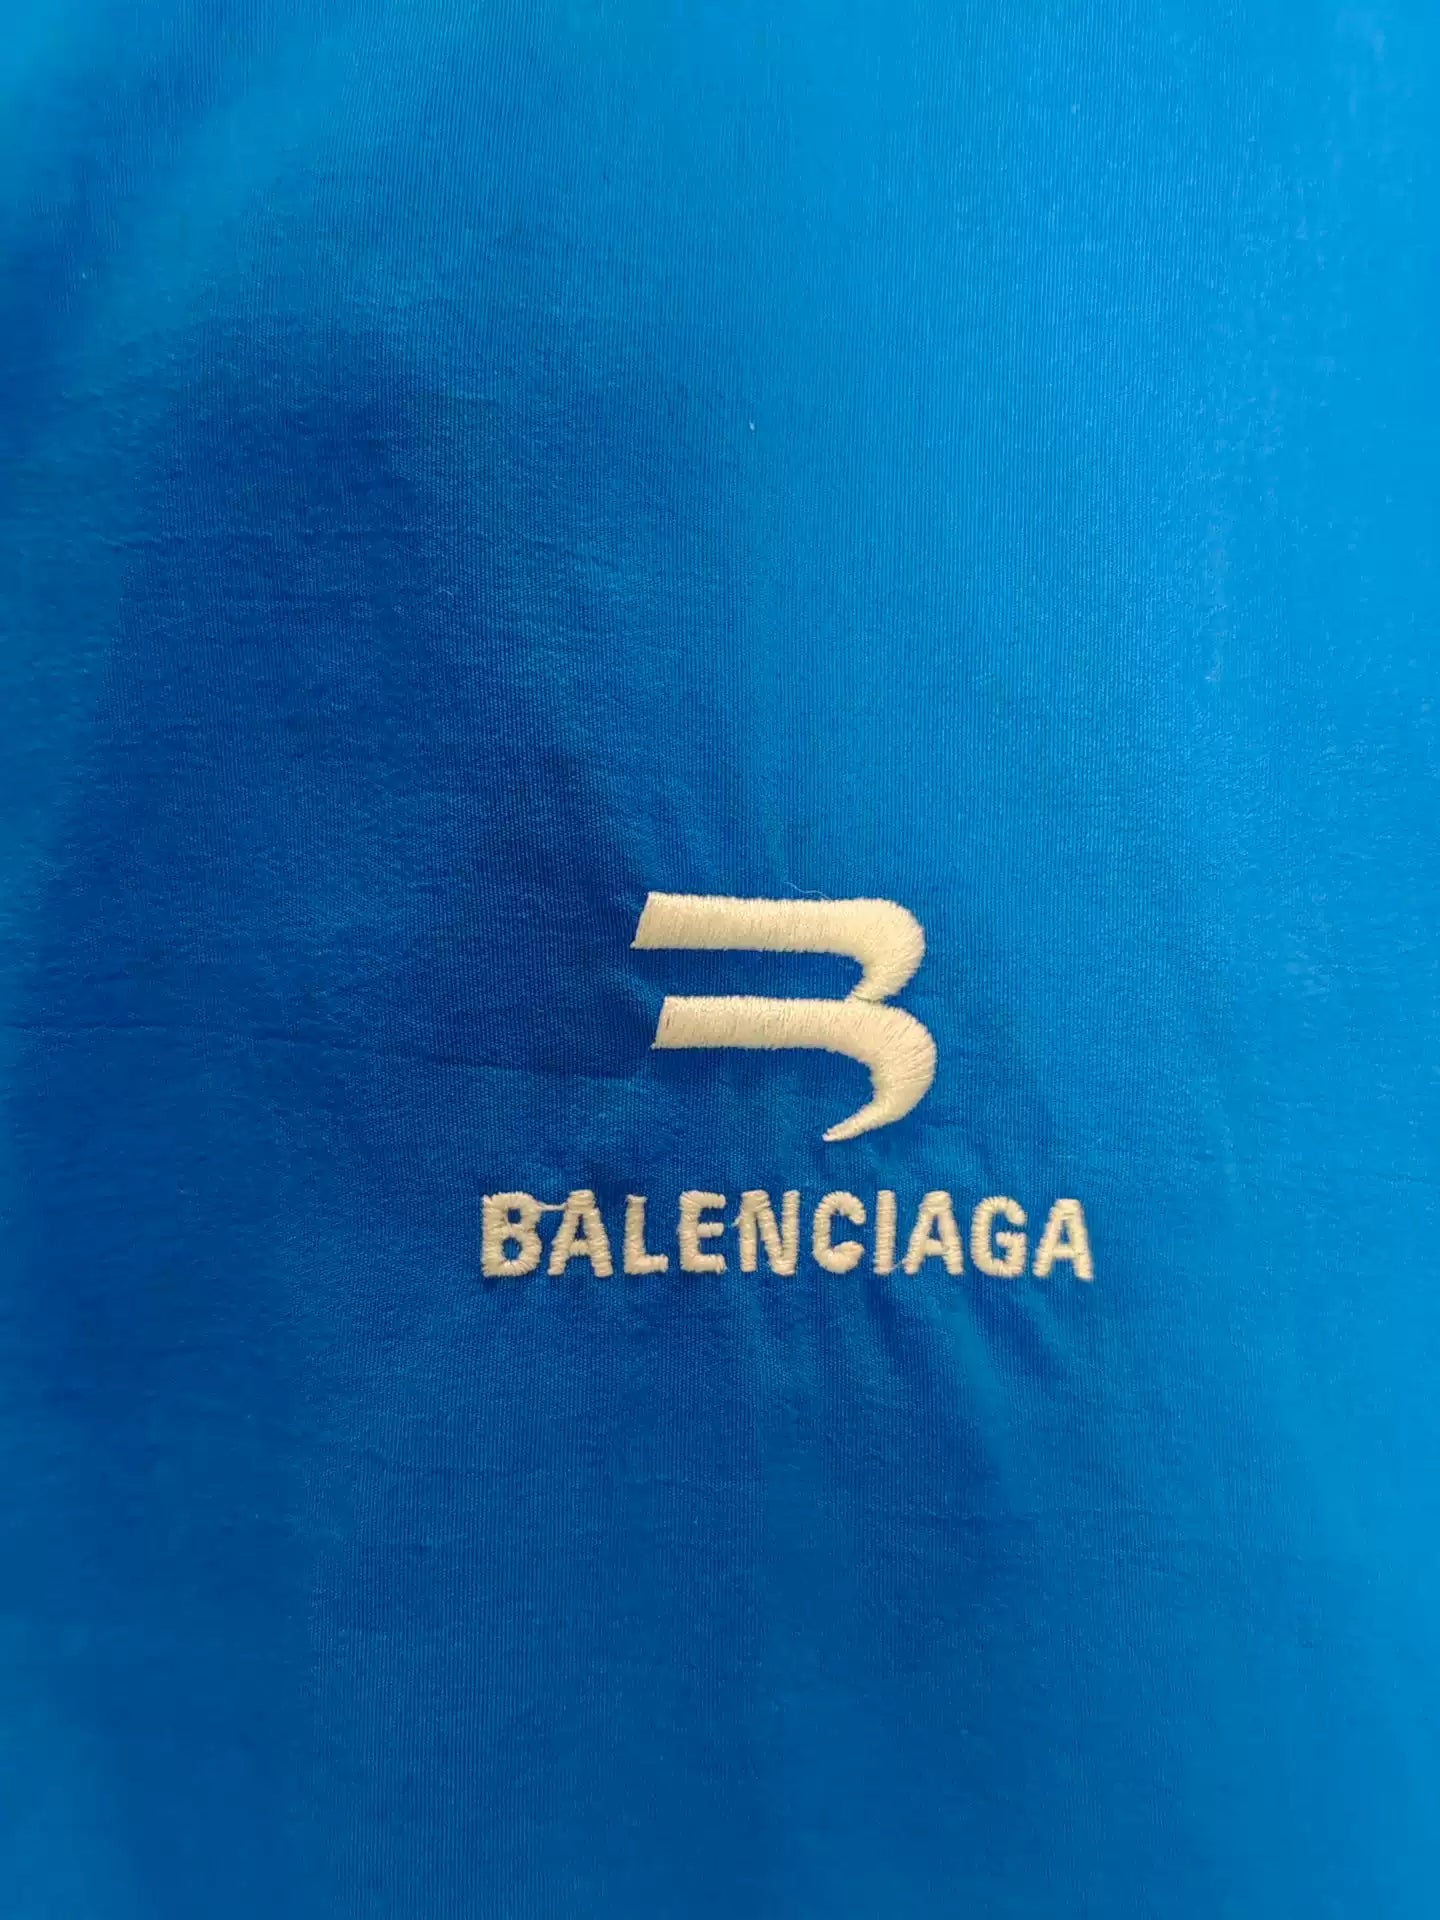 Balenciaga 21ss runway sportyb blue and white patchwork nylon jacket